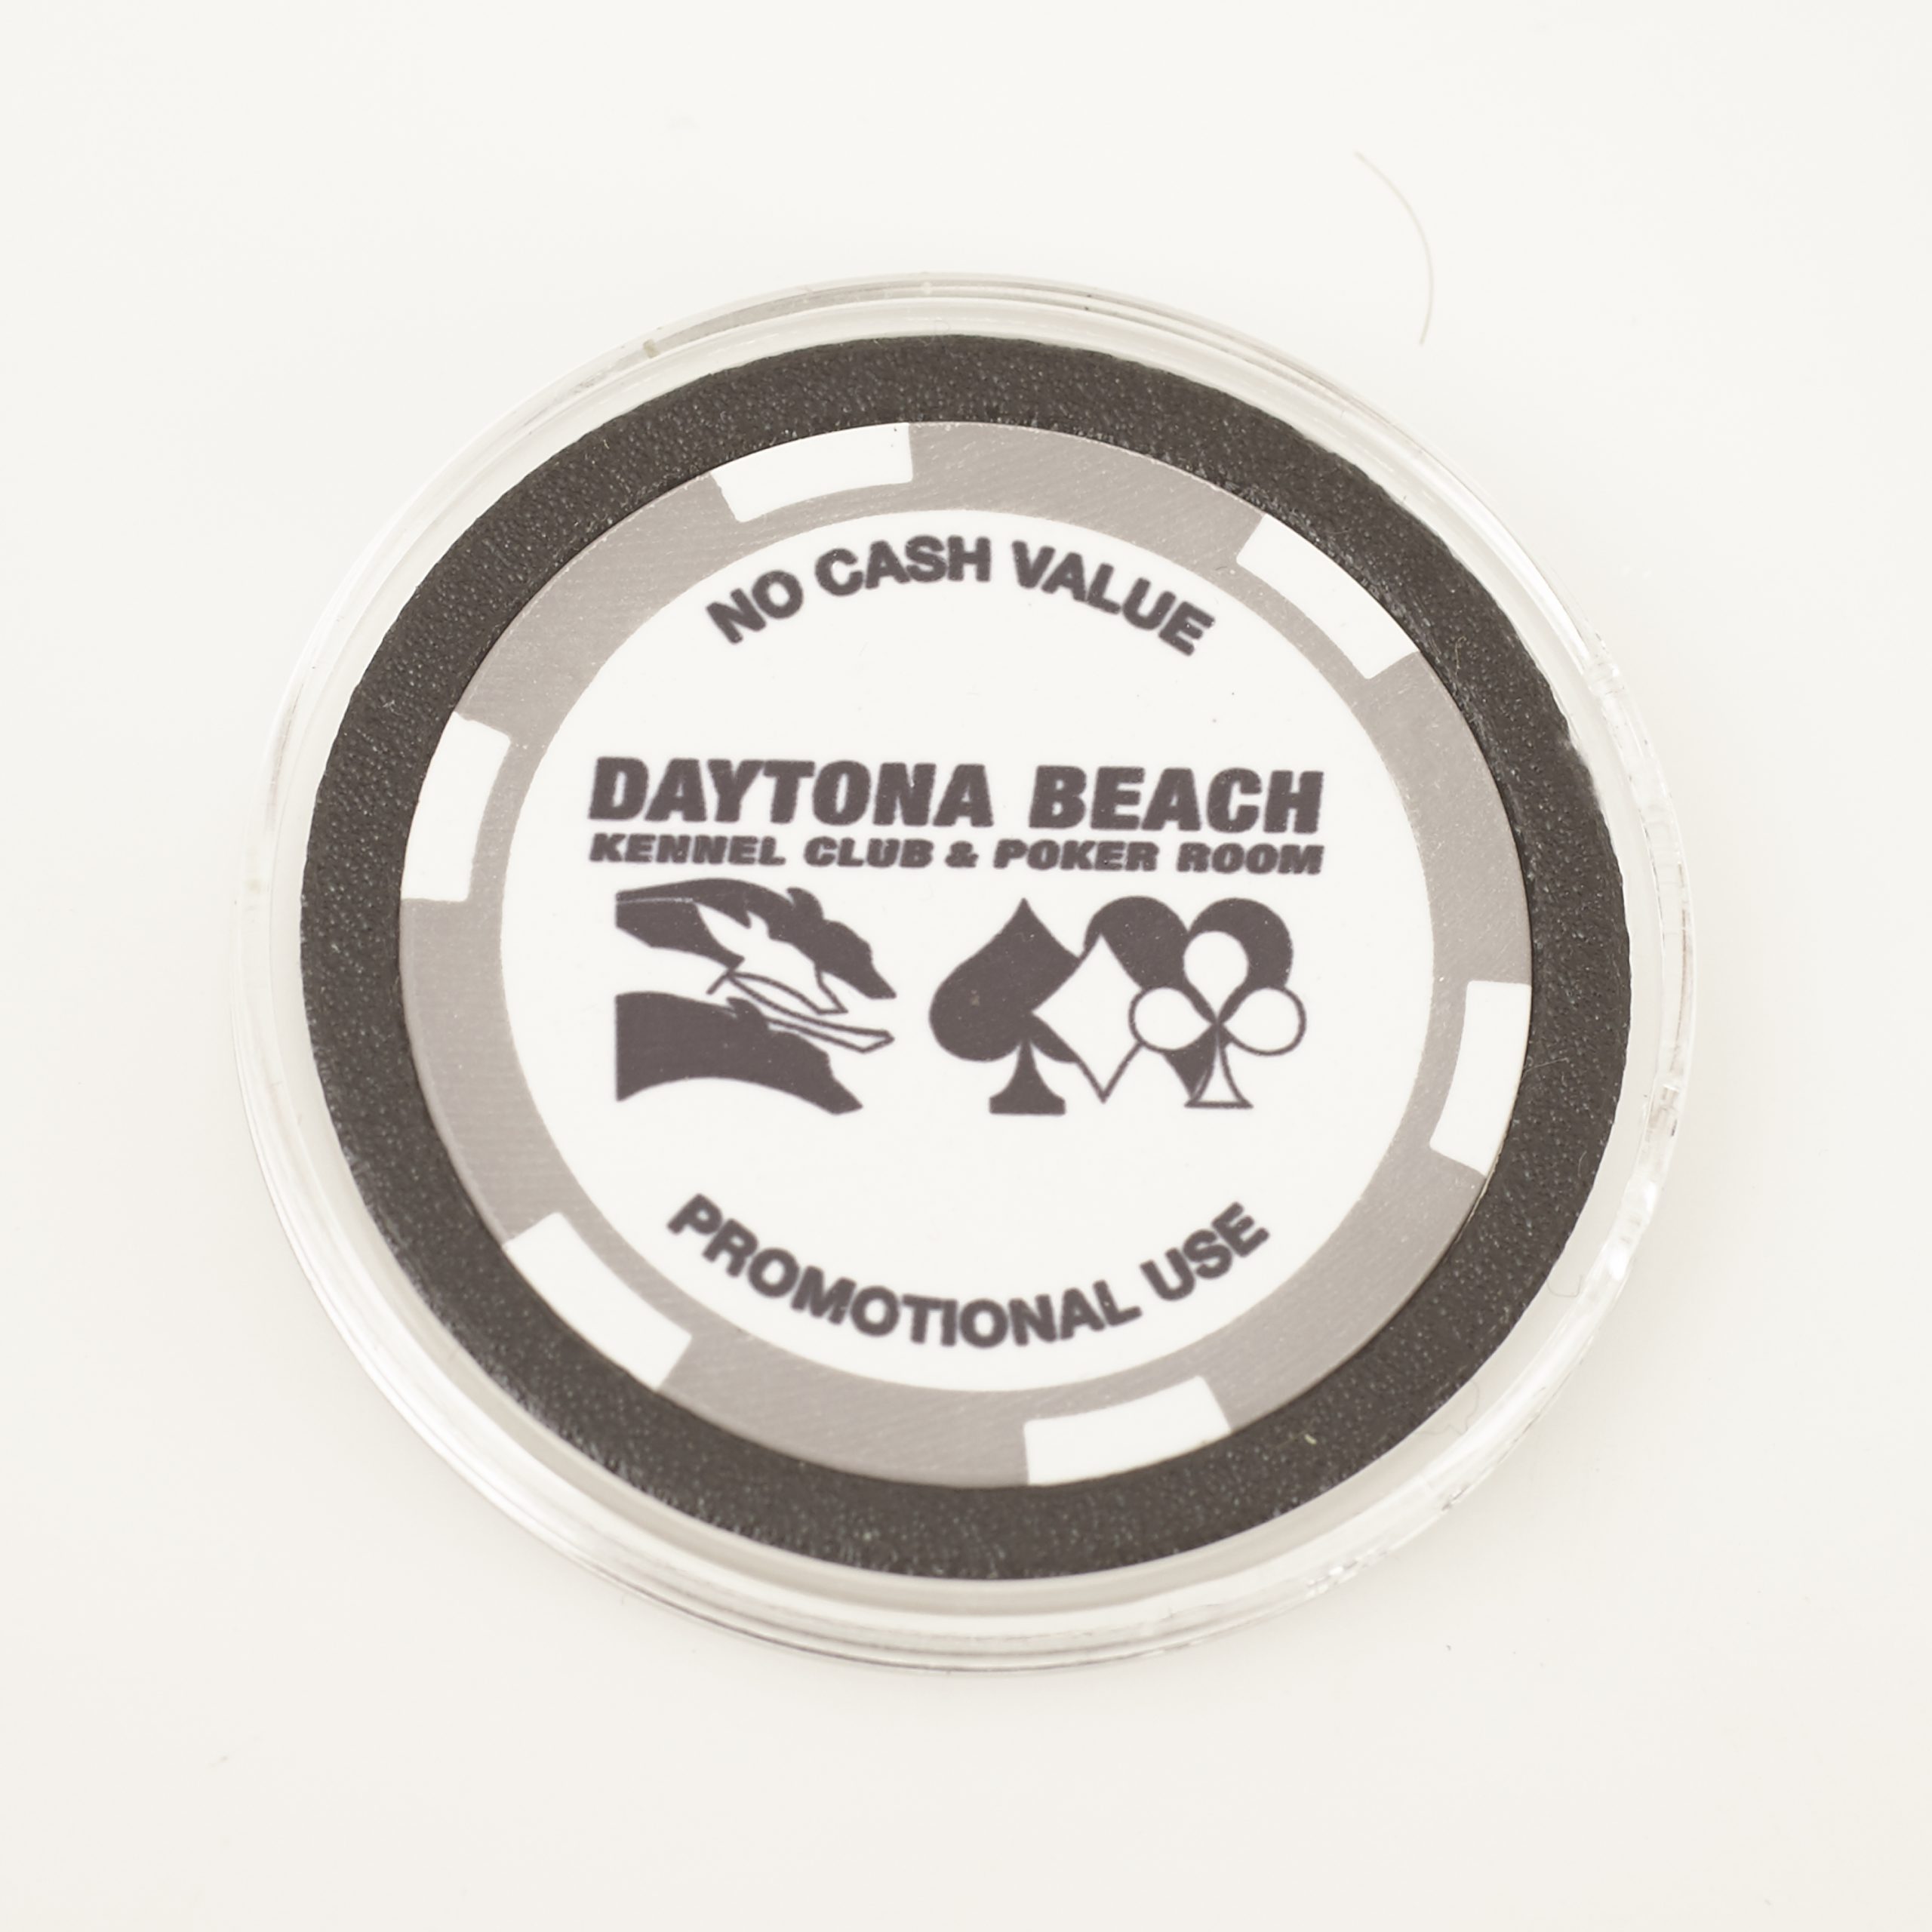 DAYTONA BEACH KENNEL CLUB & POKER ROOM, Poker Card Guard Chip